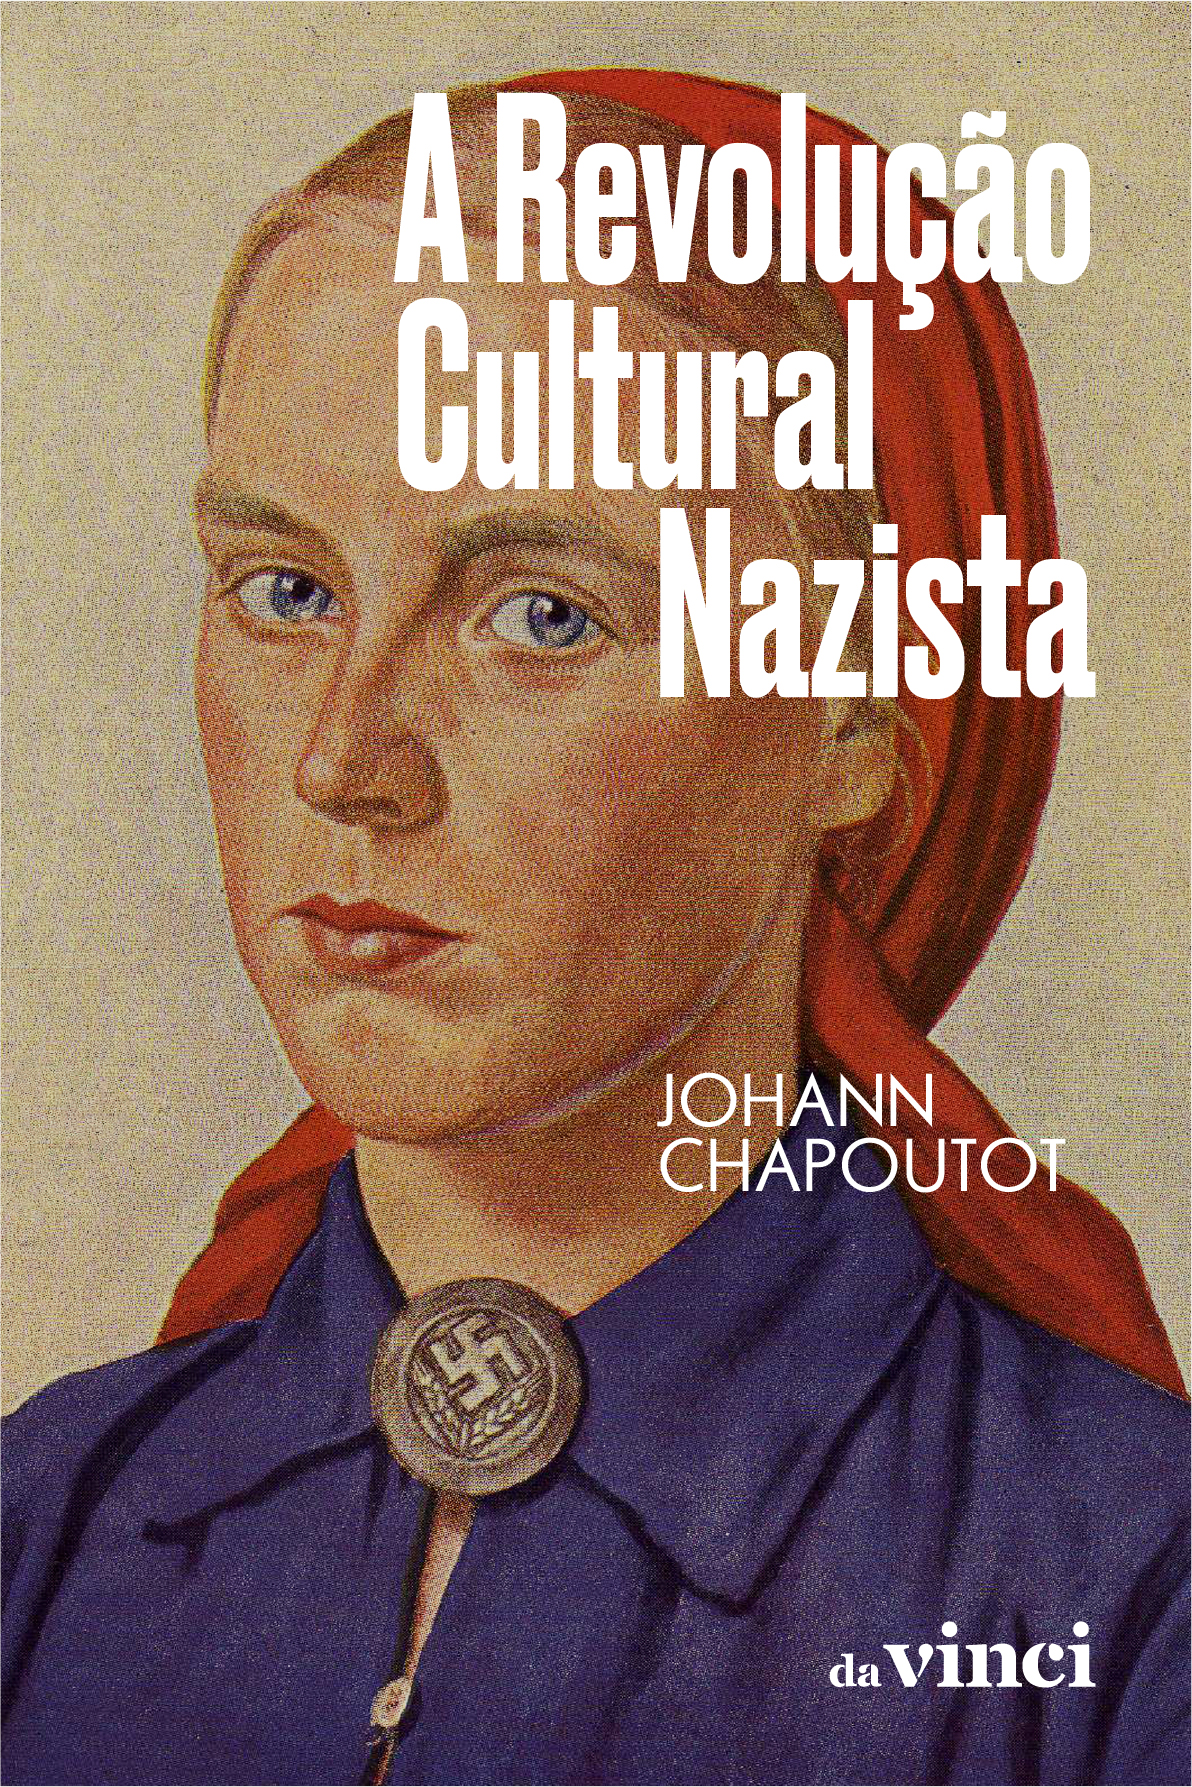 Da Vinci lança A revolução cultural nazista, de Johann Chapoutot